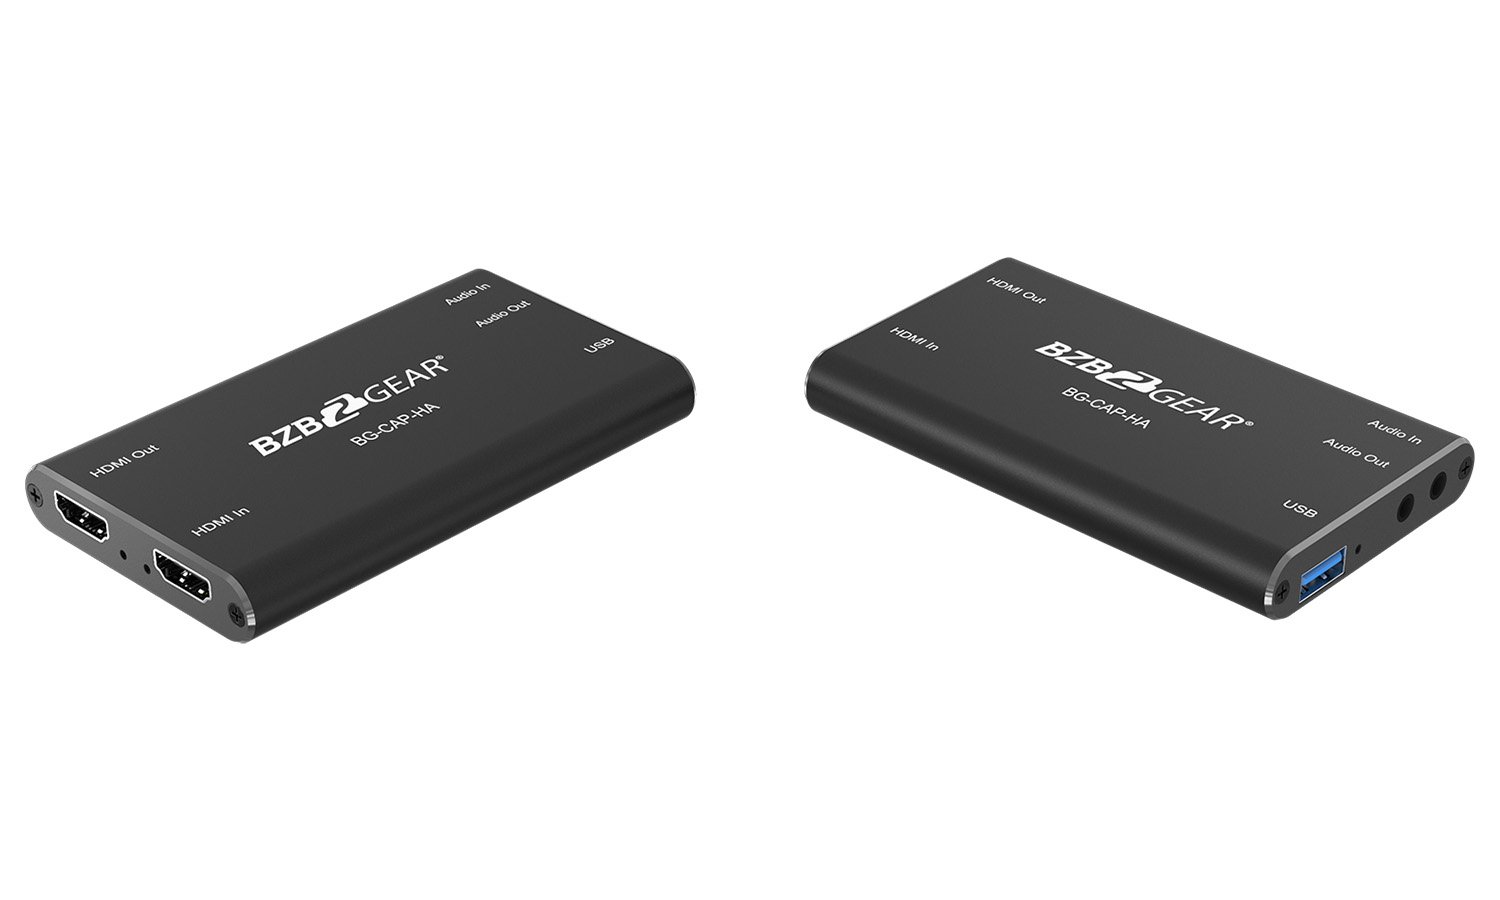 HCA12 USB 3.0 HDMI Video Capture Card with Six Ports